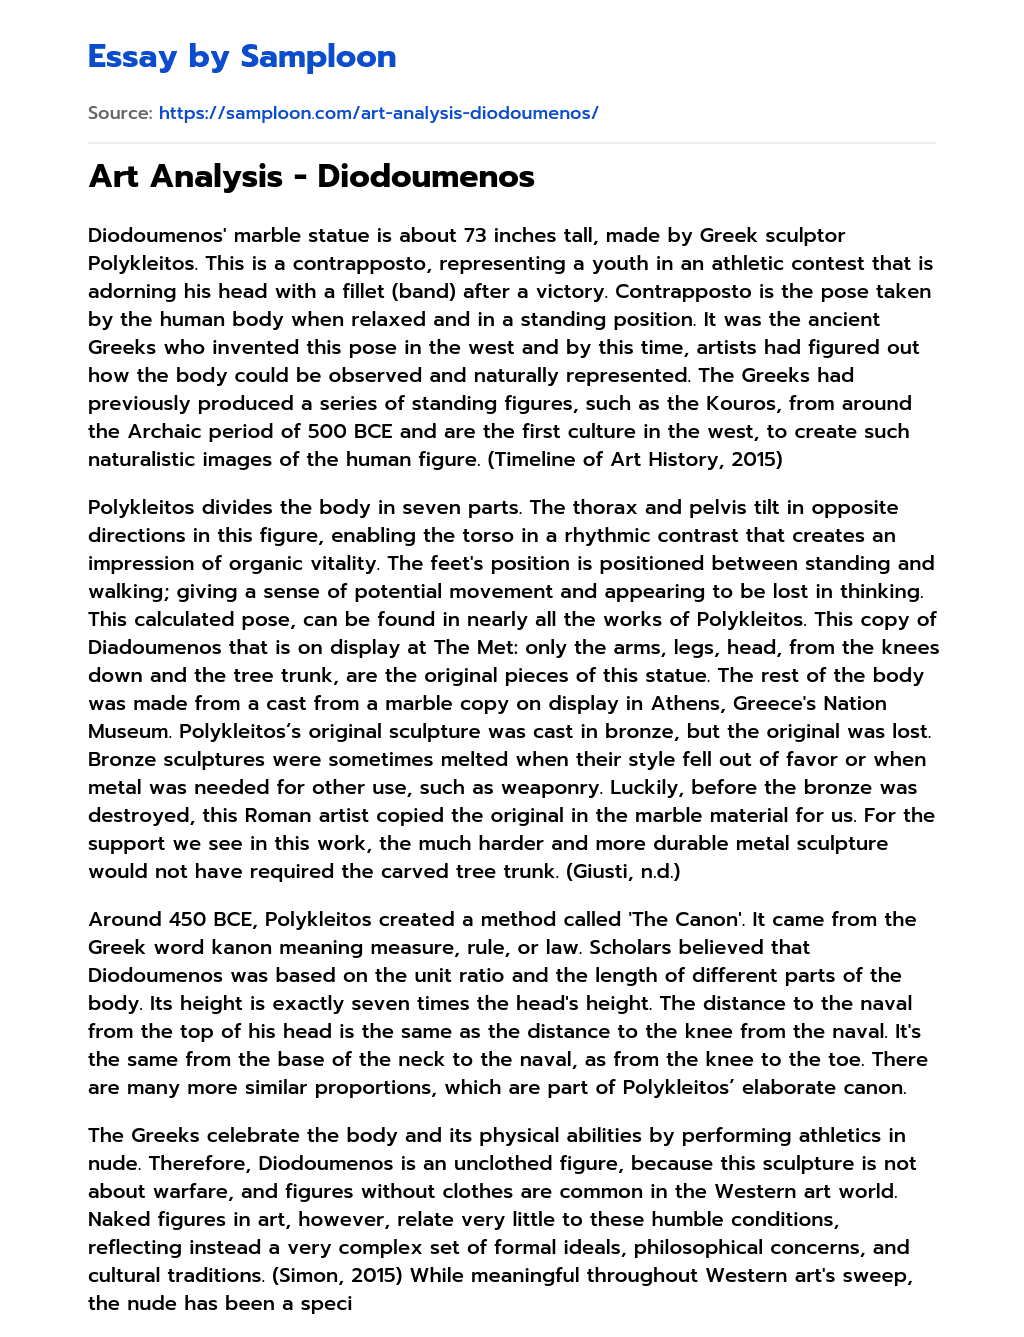 Art Analysis – Diodoumenos essay